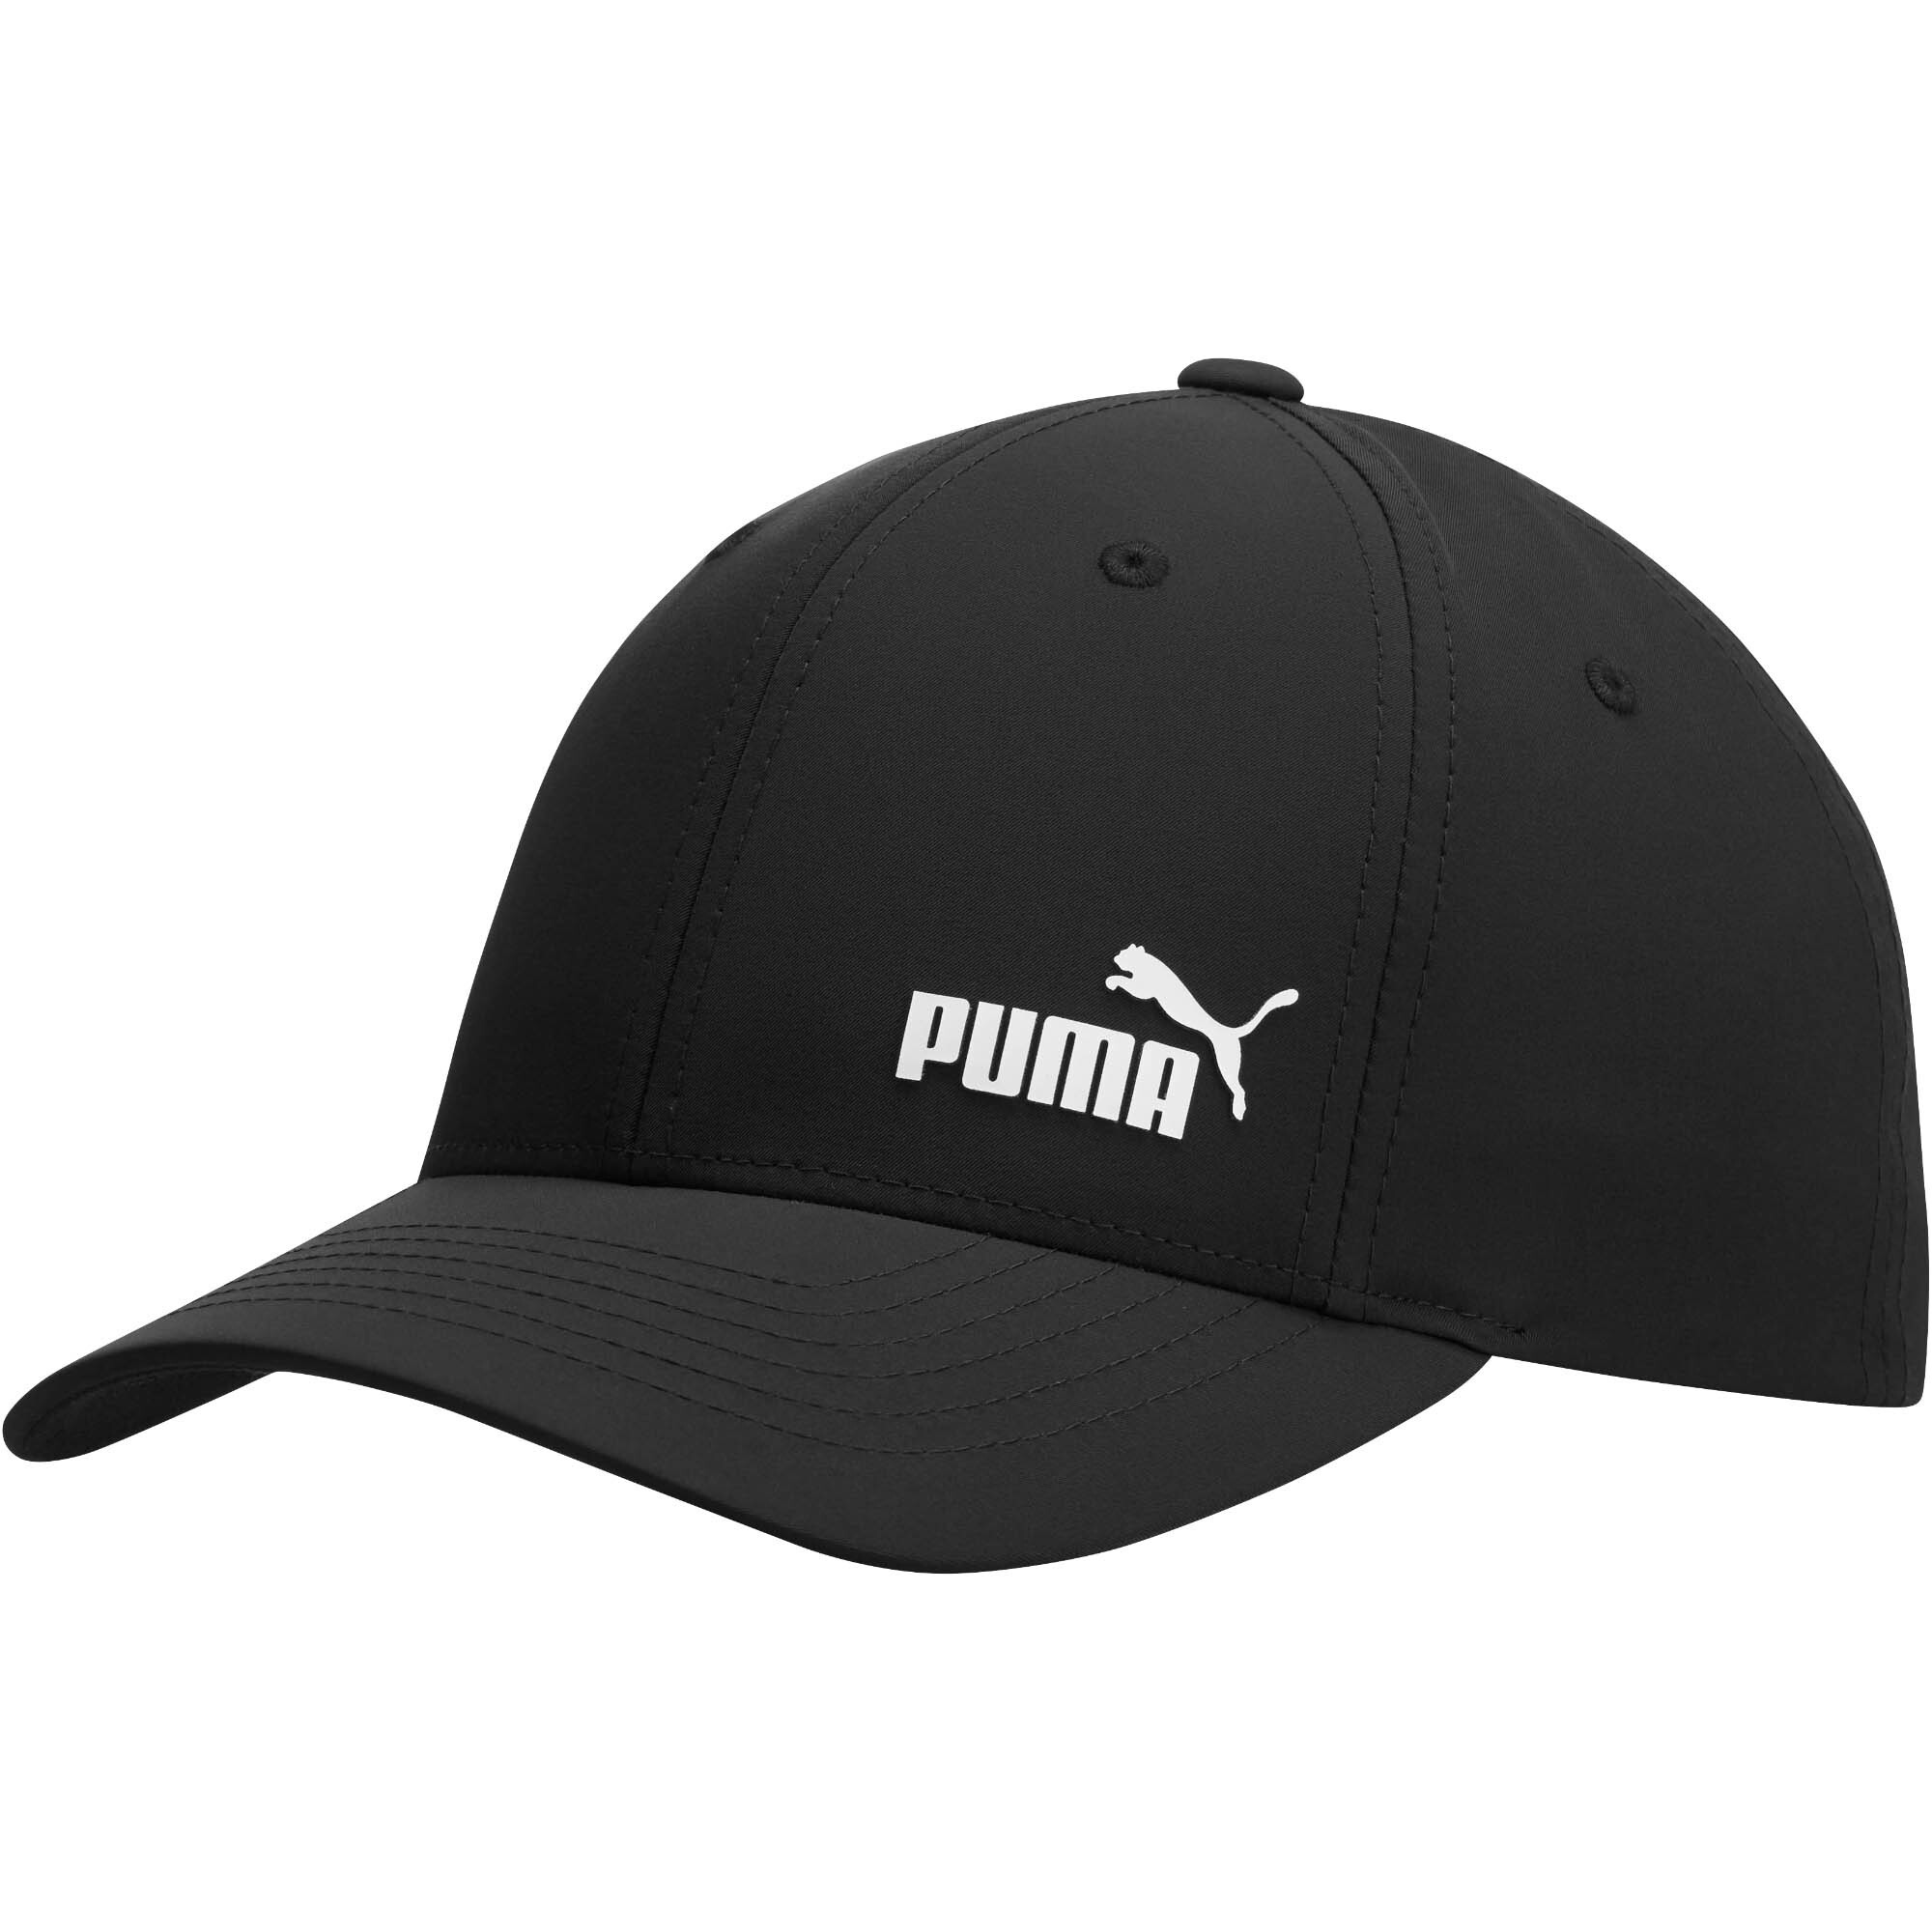 puma men's baseball cap